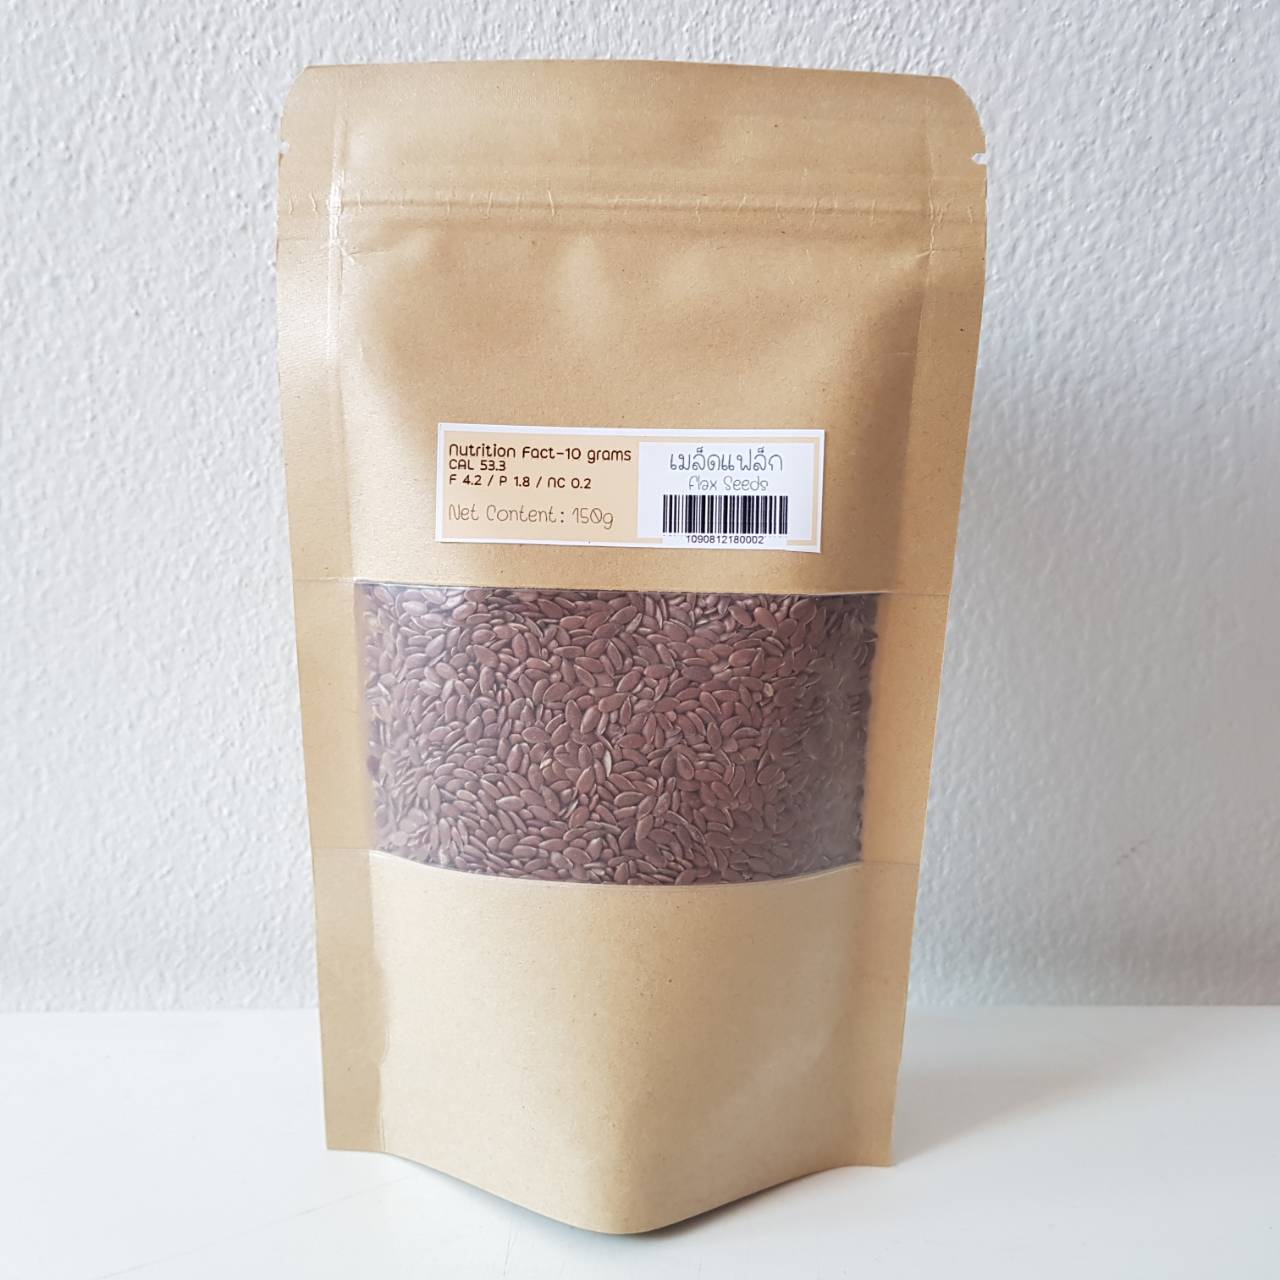 [Keto] เมล็ดแฟล็ก Flax Seeds ขนาด 150 กรัม KinD Keto